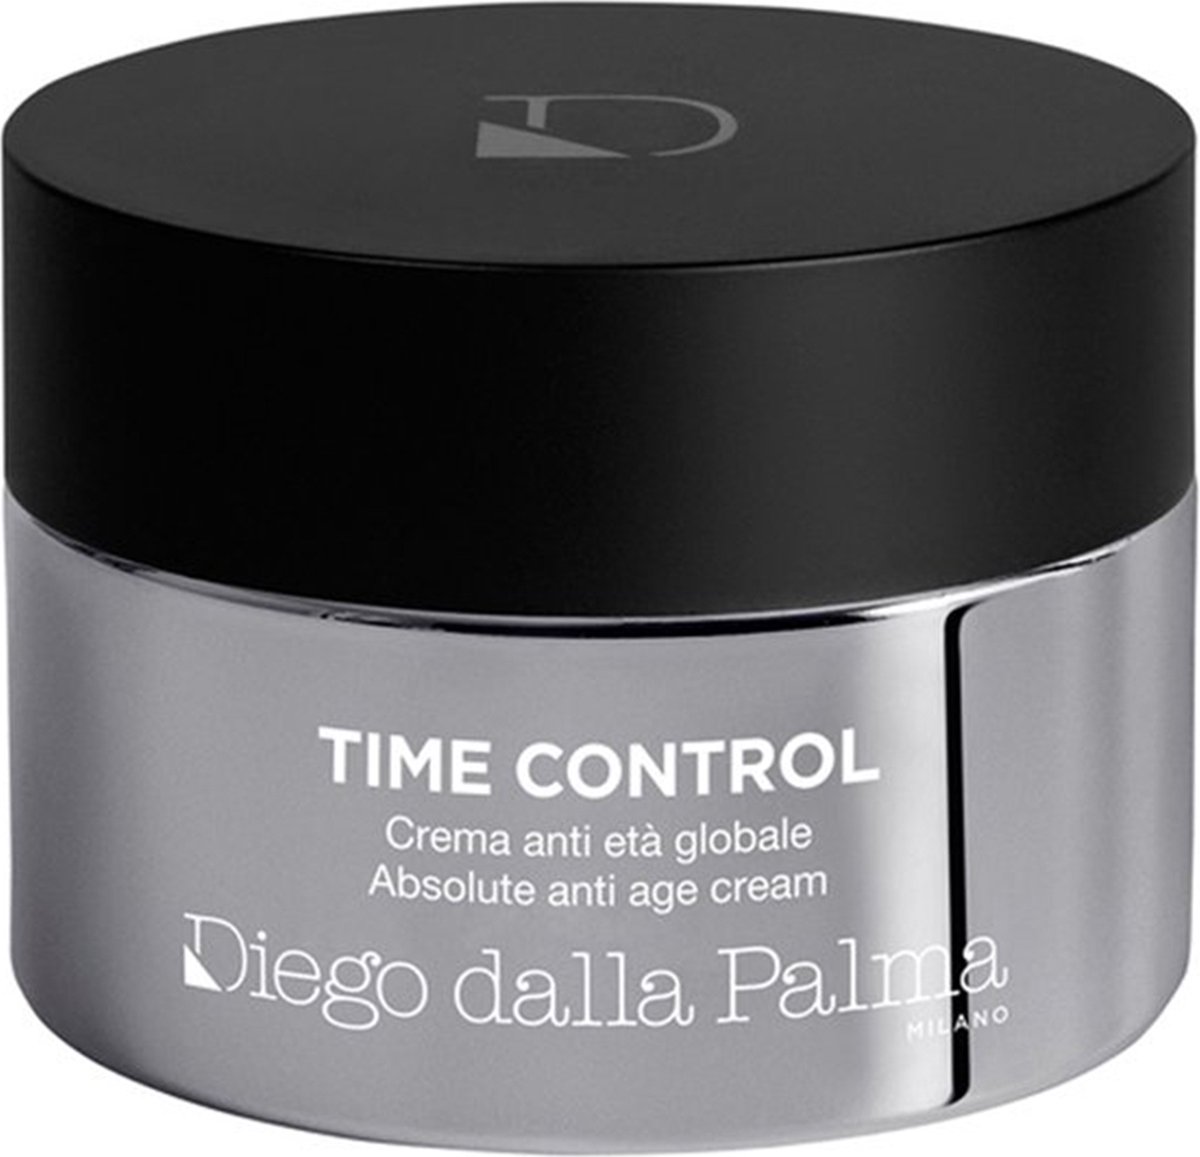 Diego Dalla Palma Time Control Absolute Anti Age Face Cream